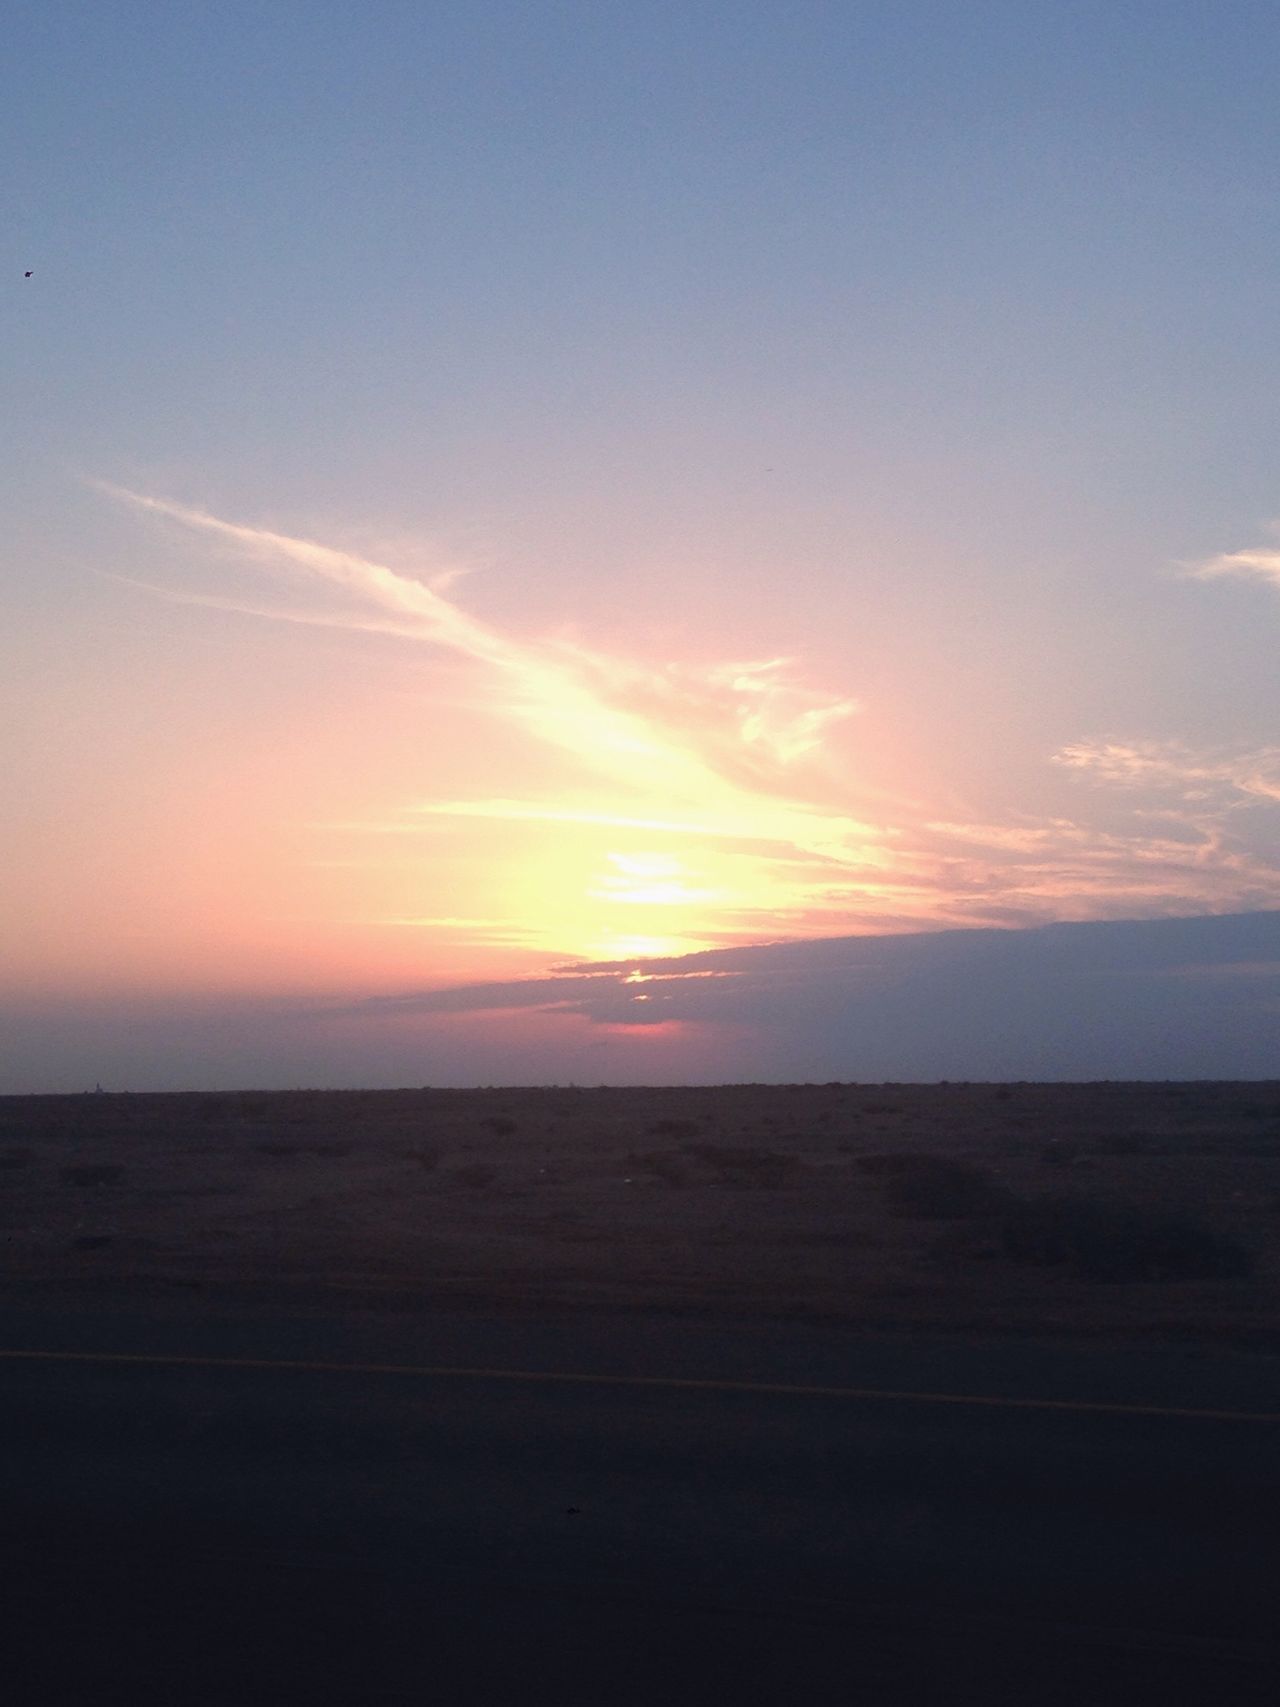 Jeddah - Al-Madinah Highway